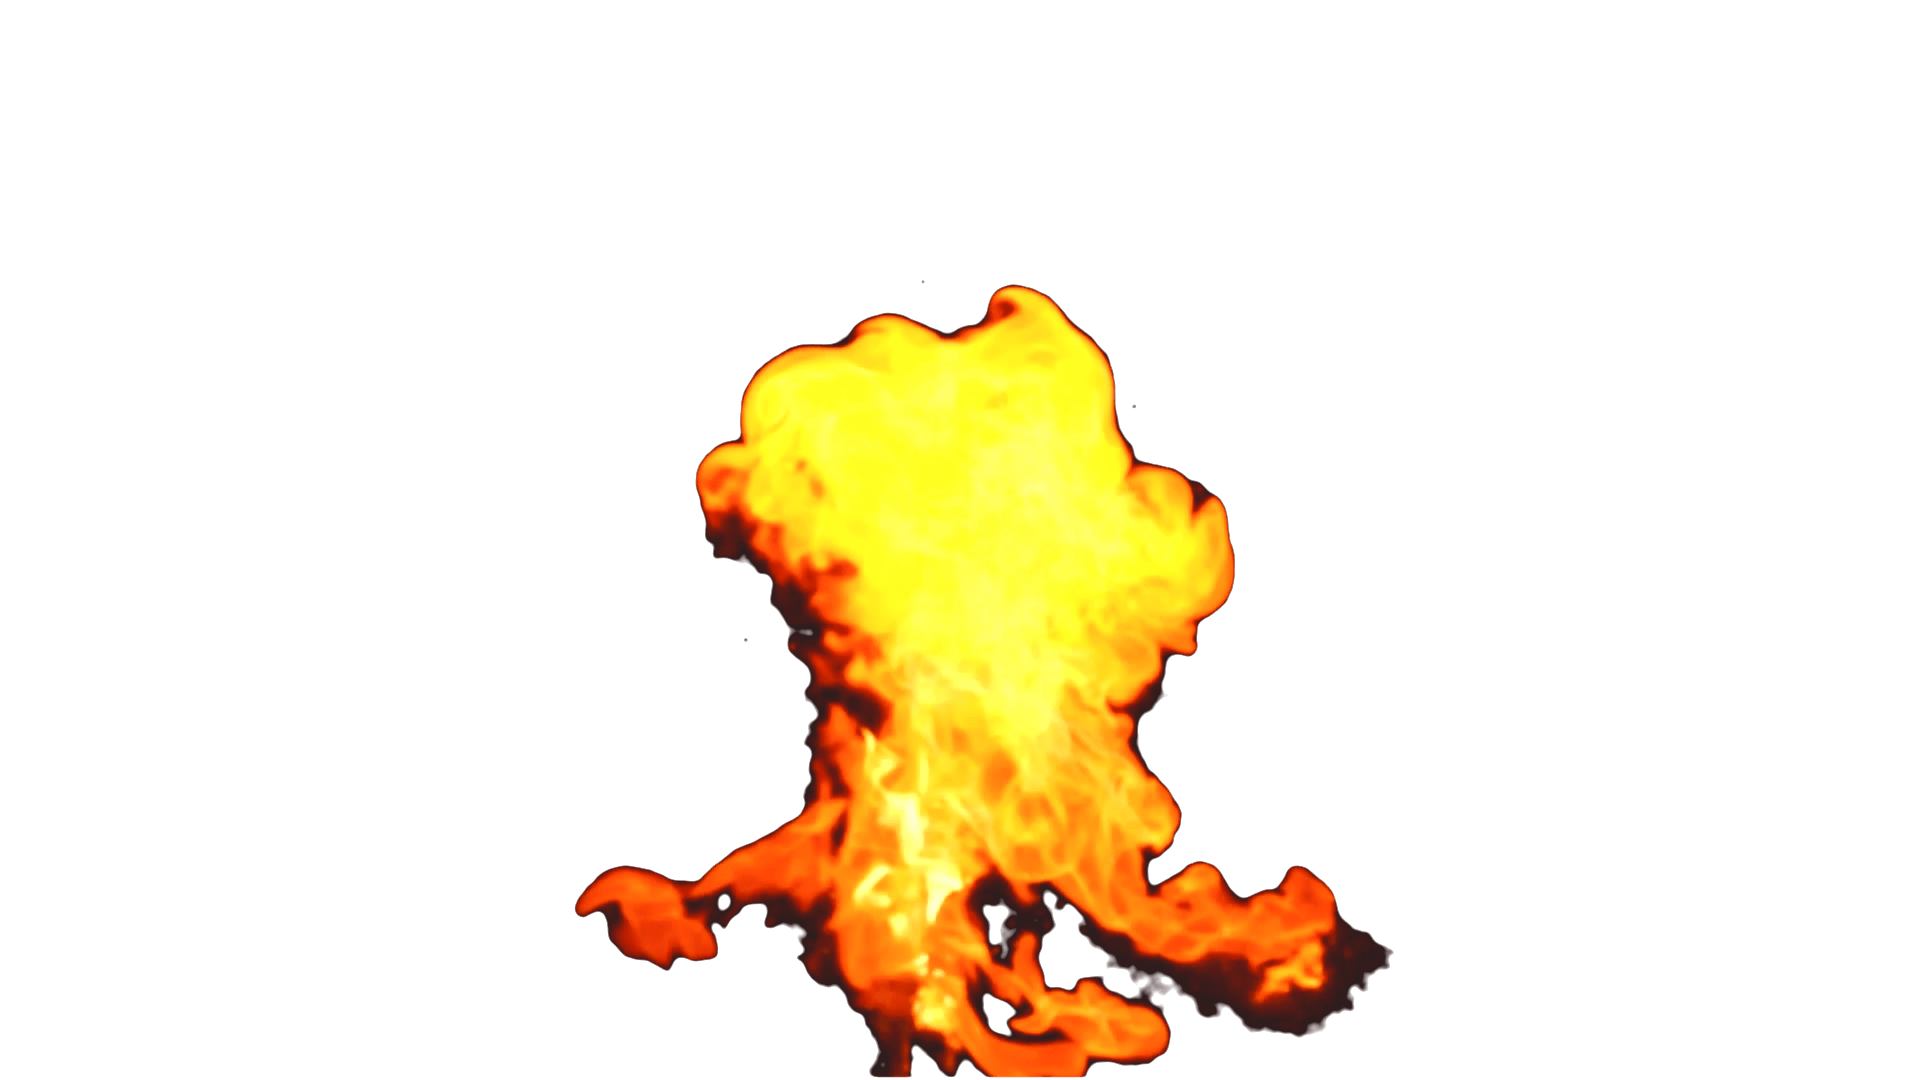 Fireball Effect PNG HD Quality